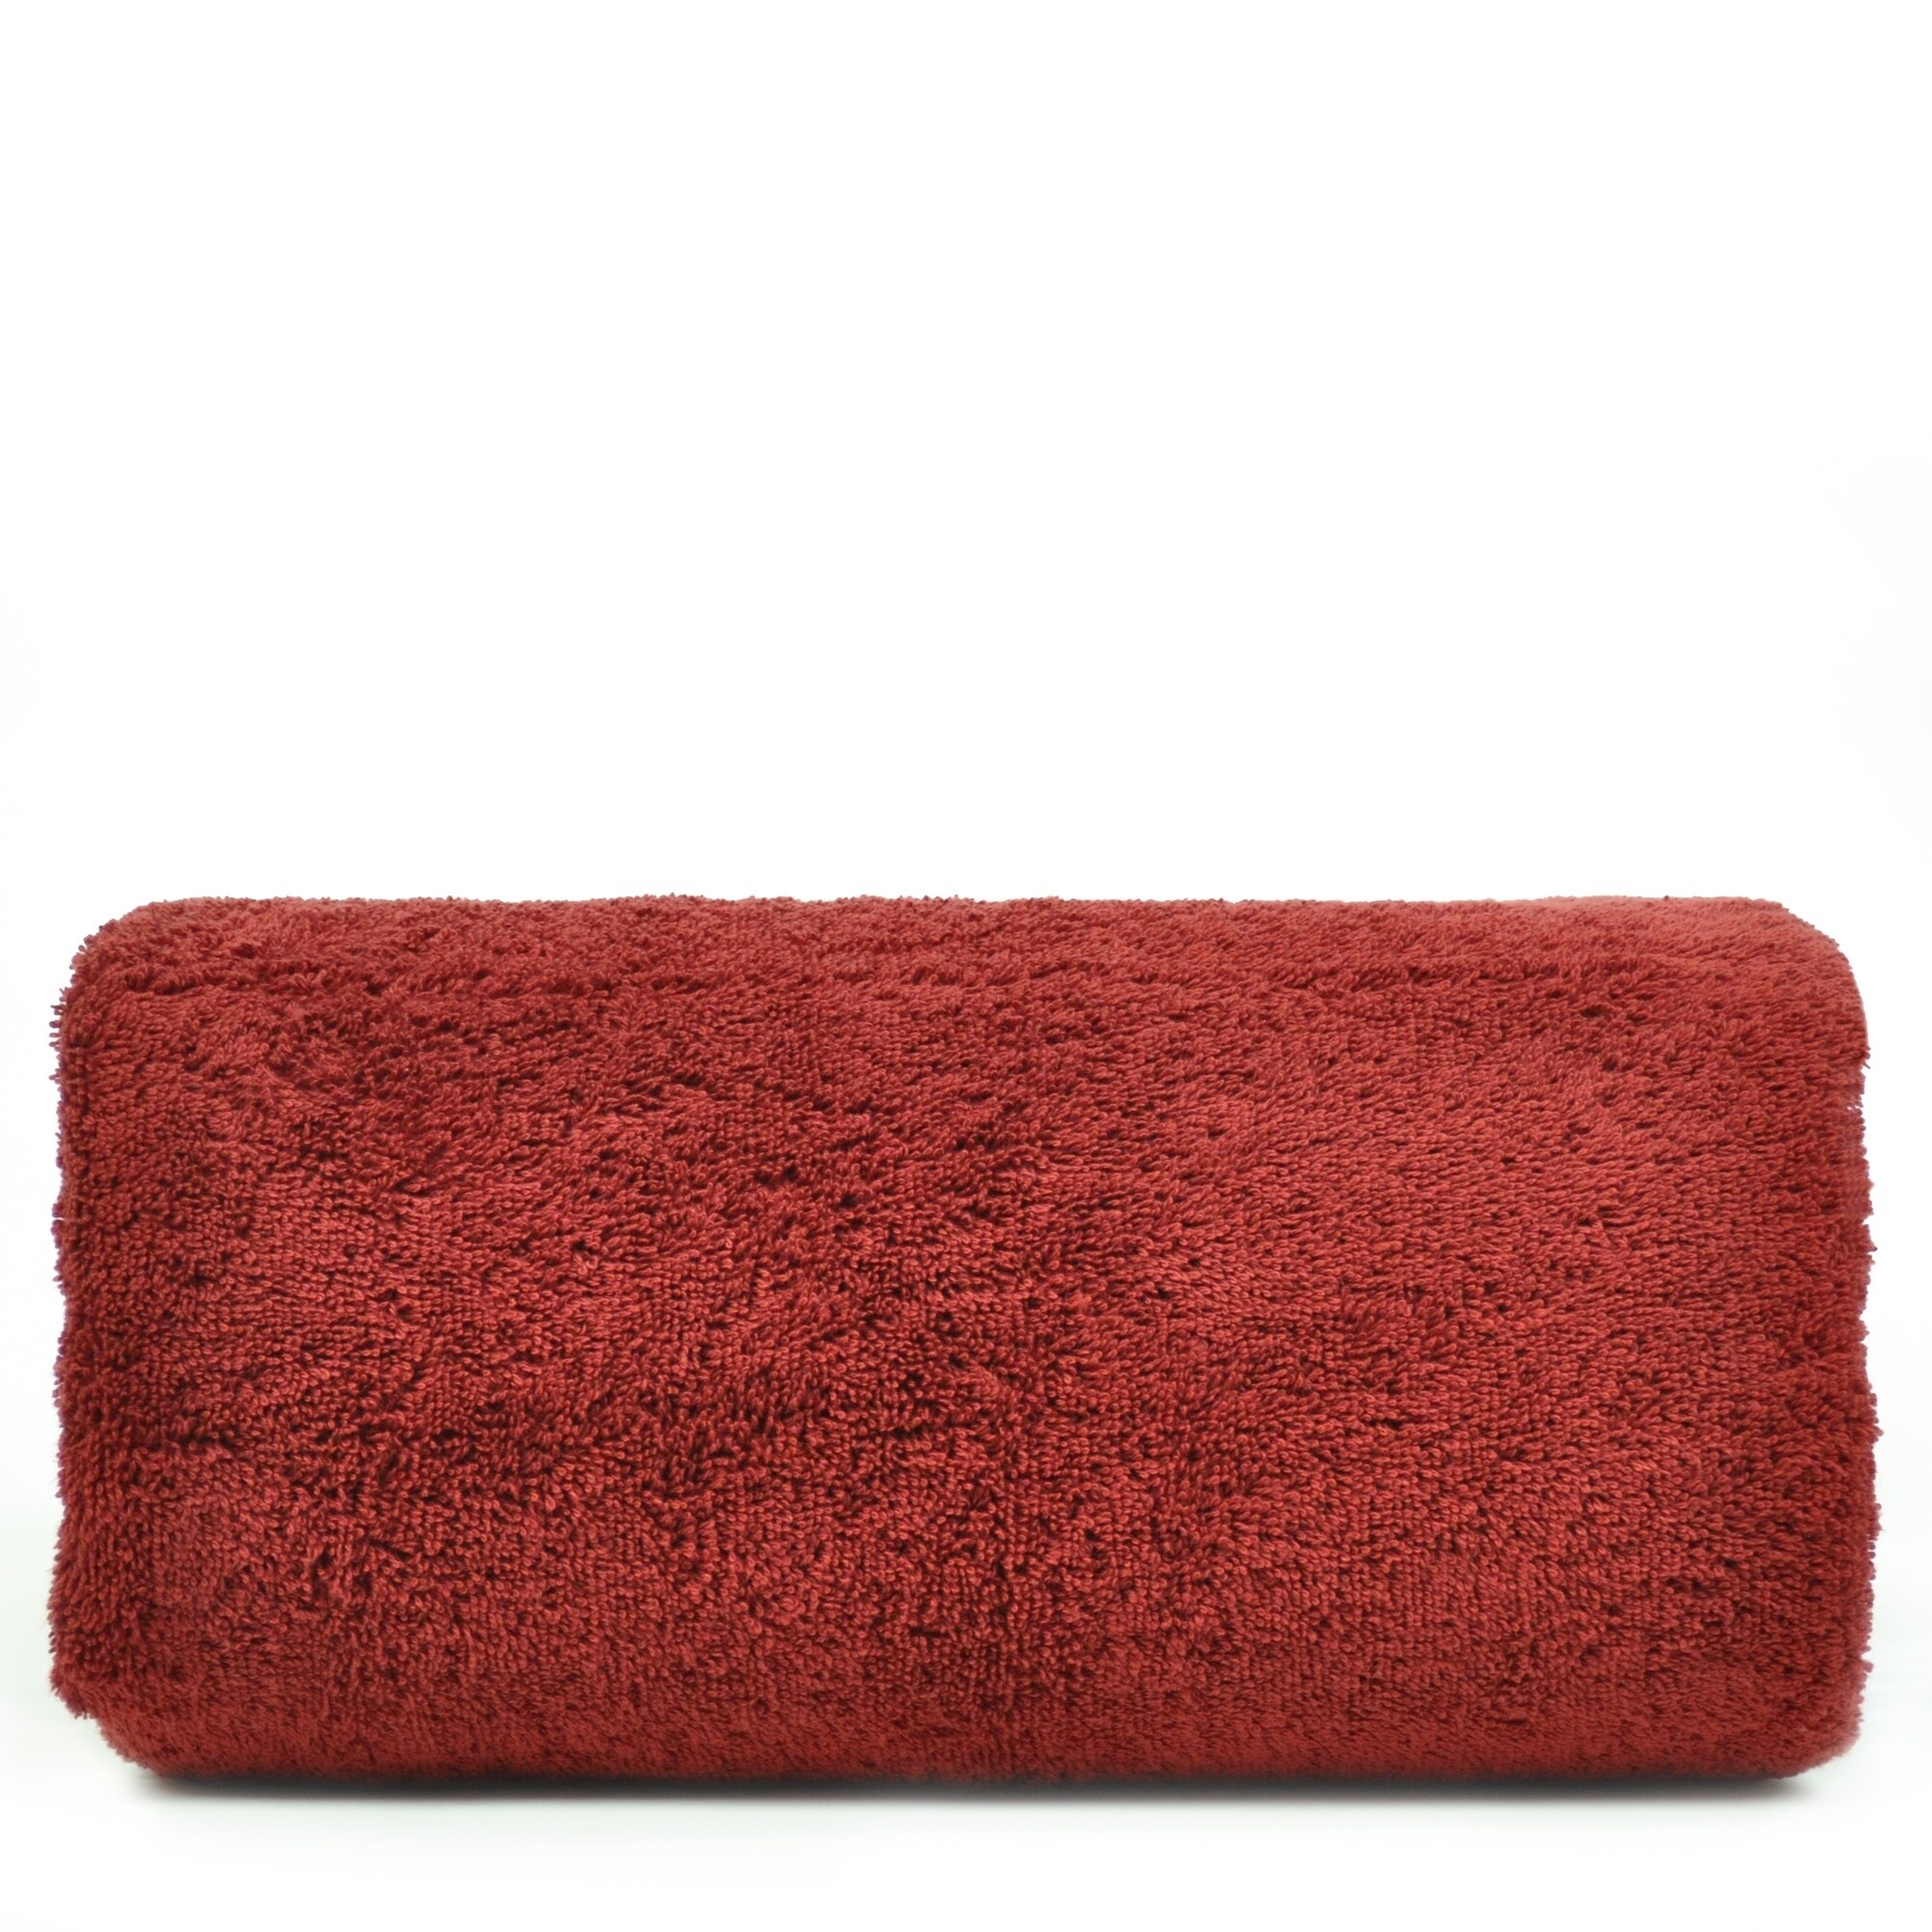 SELECT BATH SHEET 40X80 – Thirsty Towels